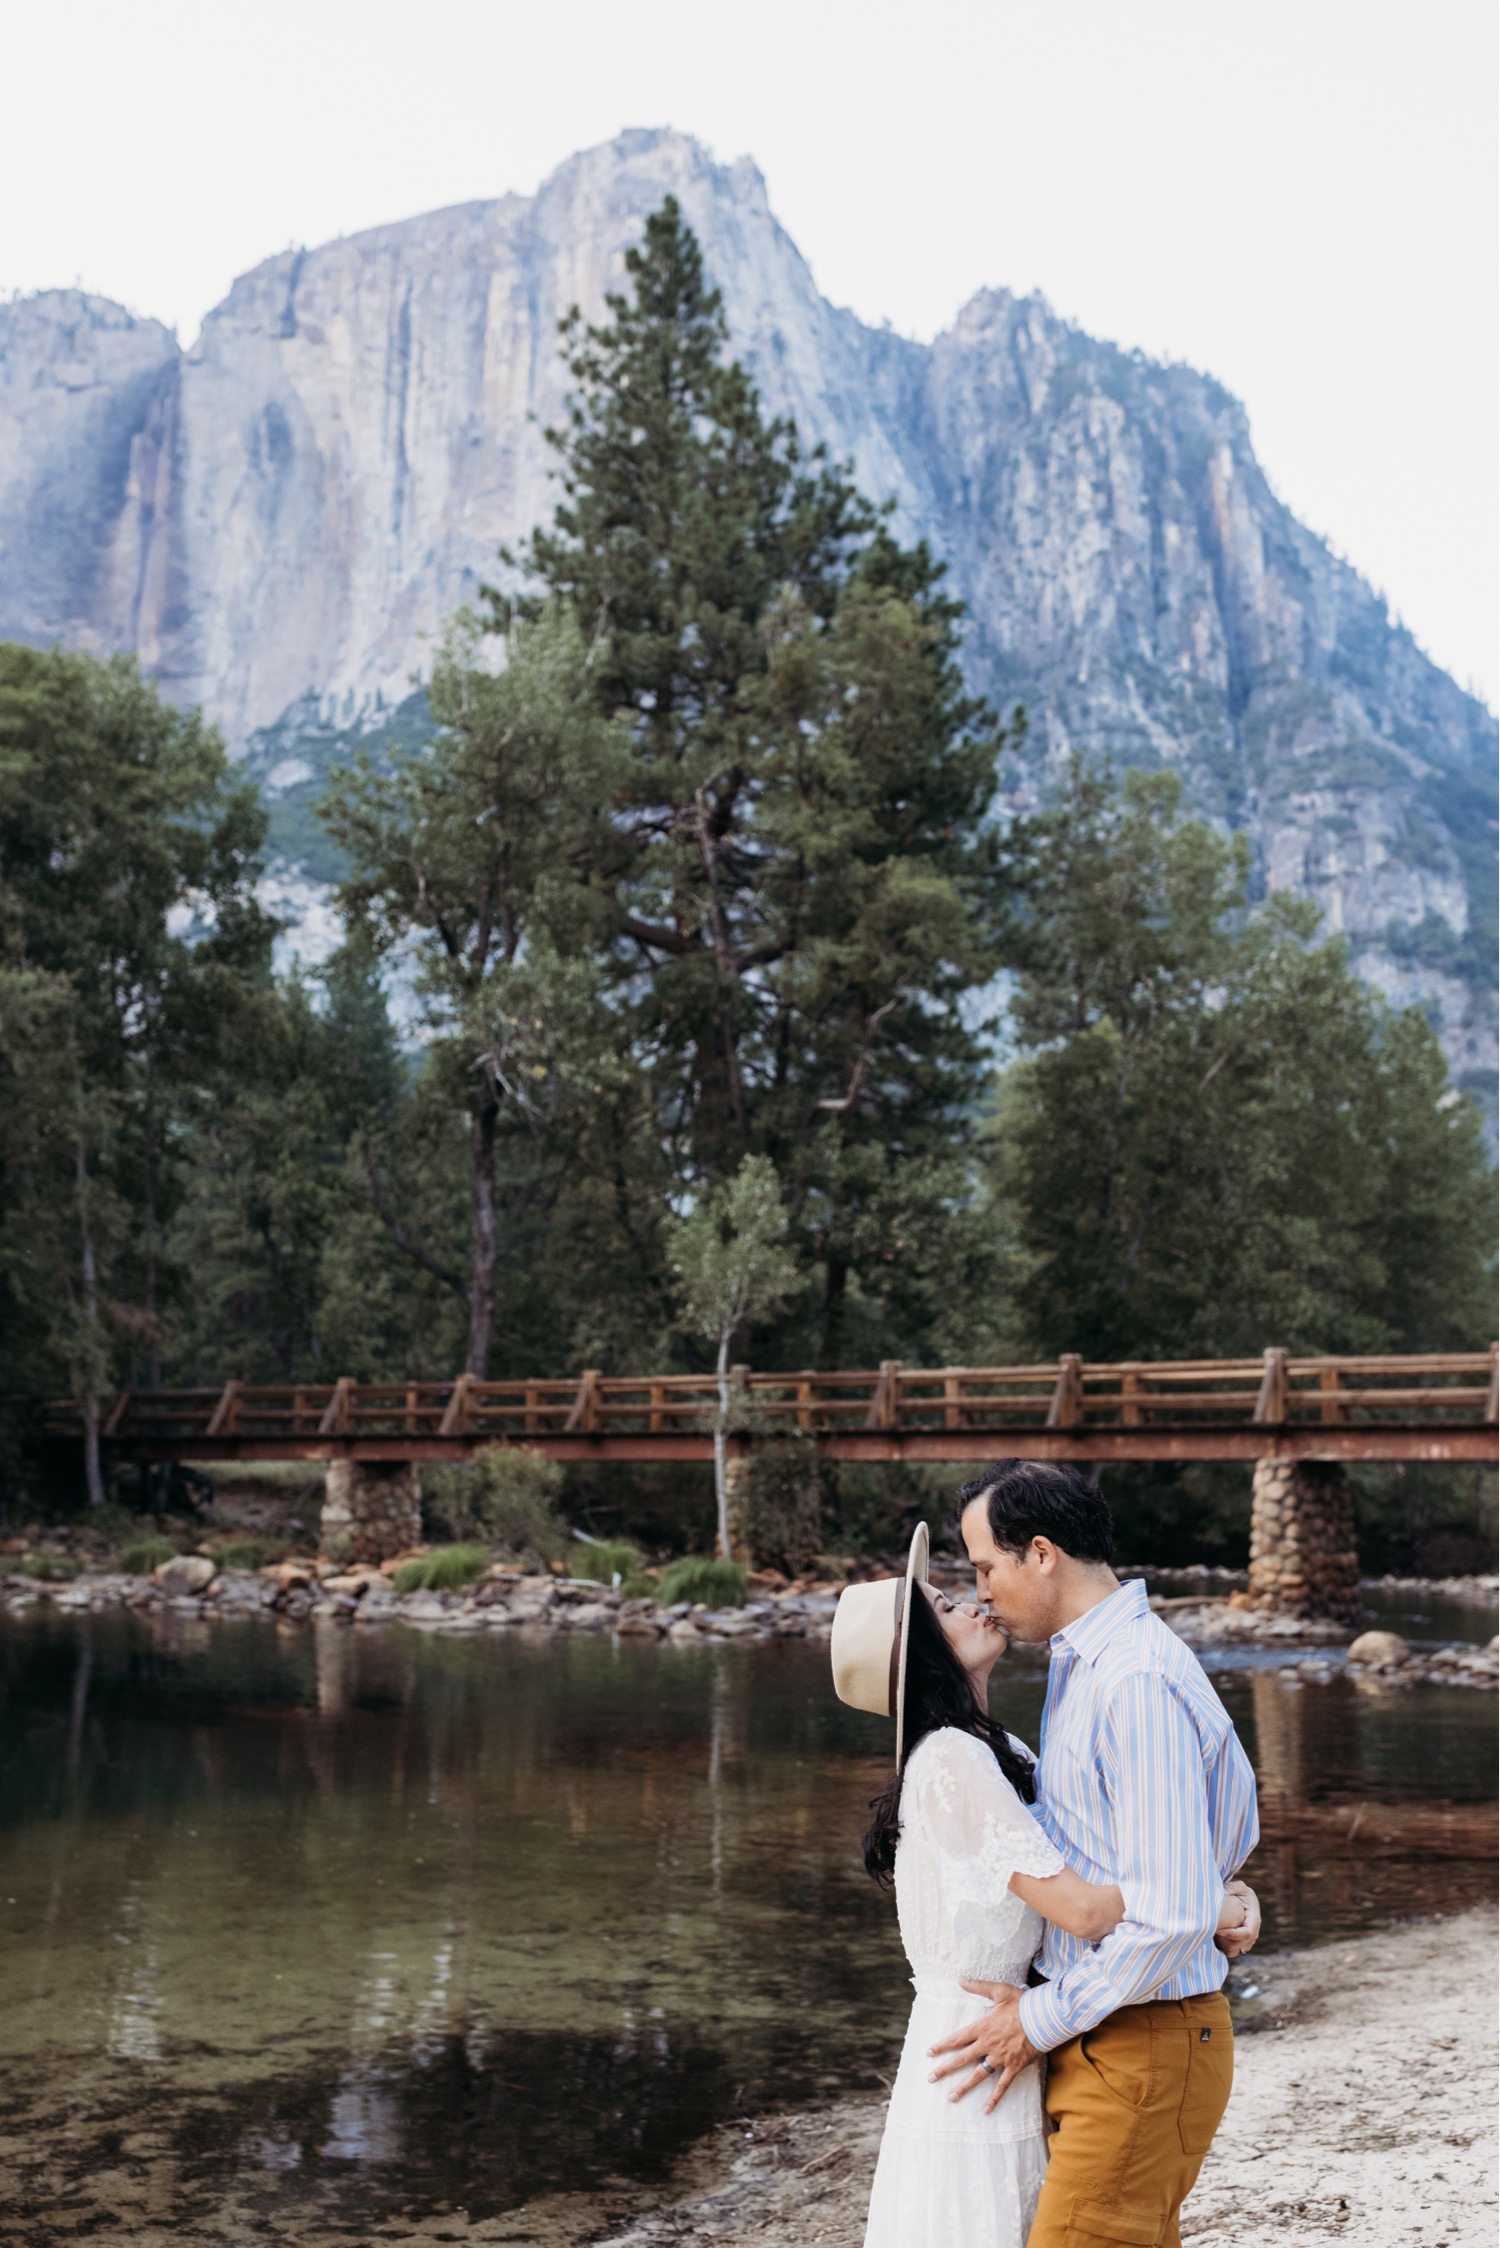 Couple kisses near a small lake underneath the tall Yosemite peaks. Photo taken by Yosemite photographer Liz Koston.